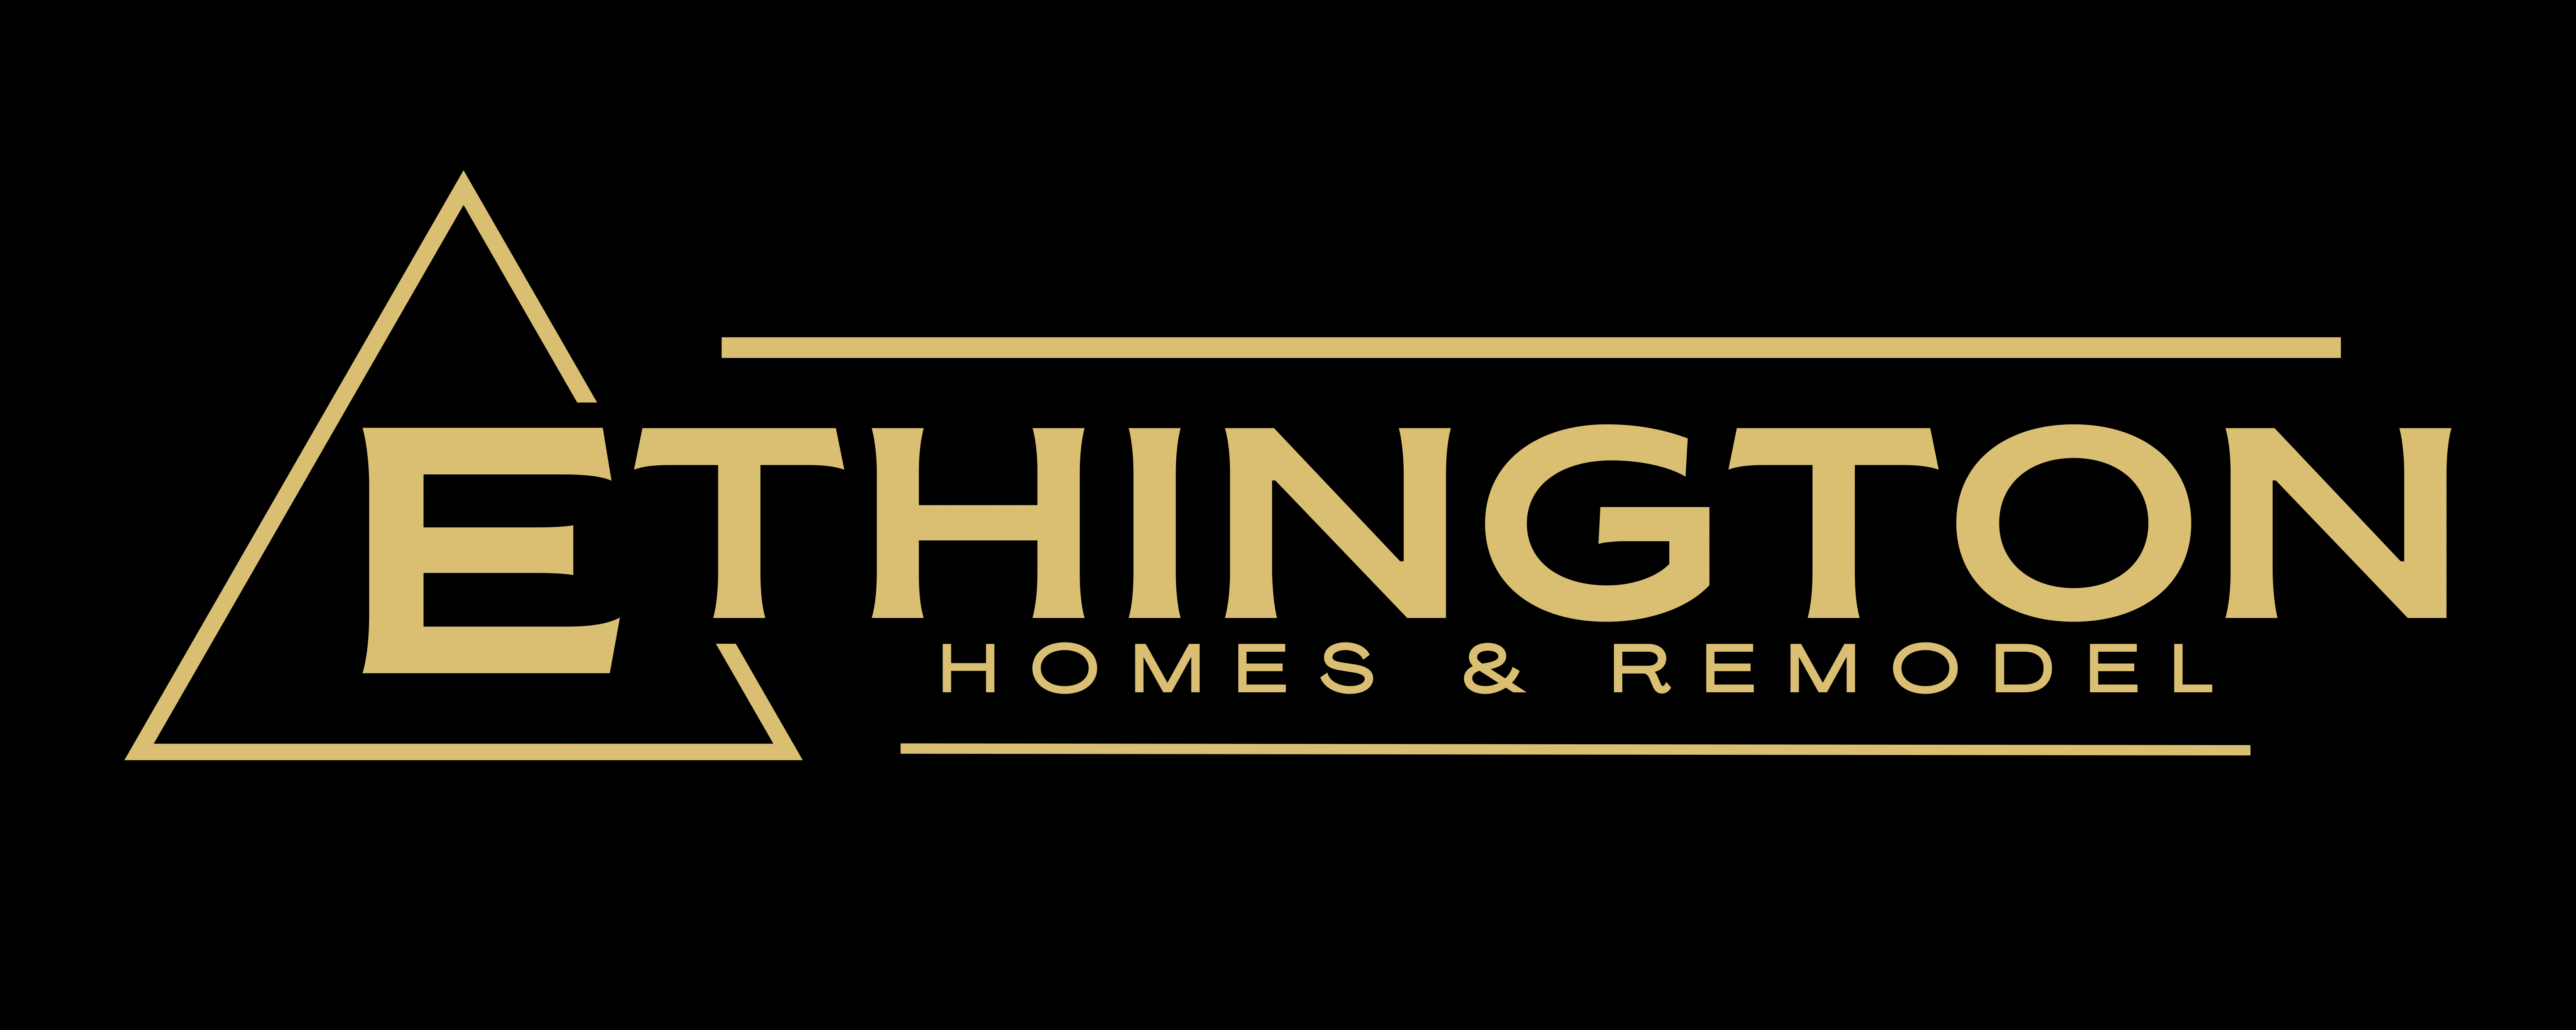 Ethington Homes & Remodel